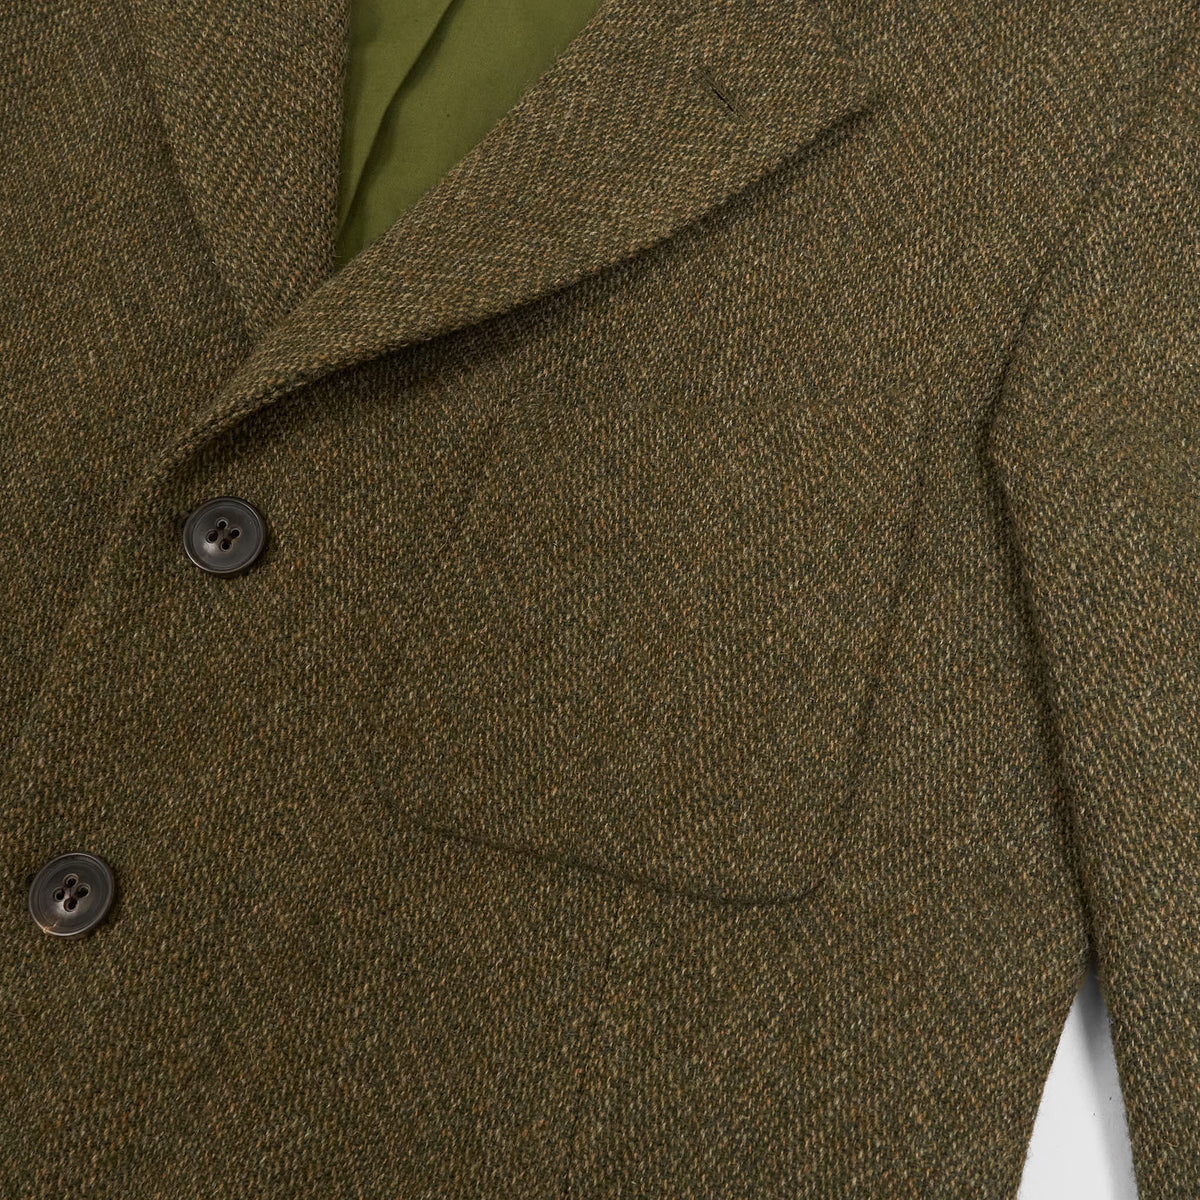 Nigel Cabourn Classic Herringbone Fox Flannel Wool Blazer